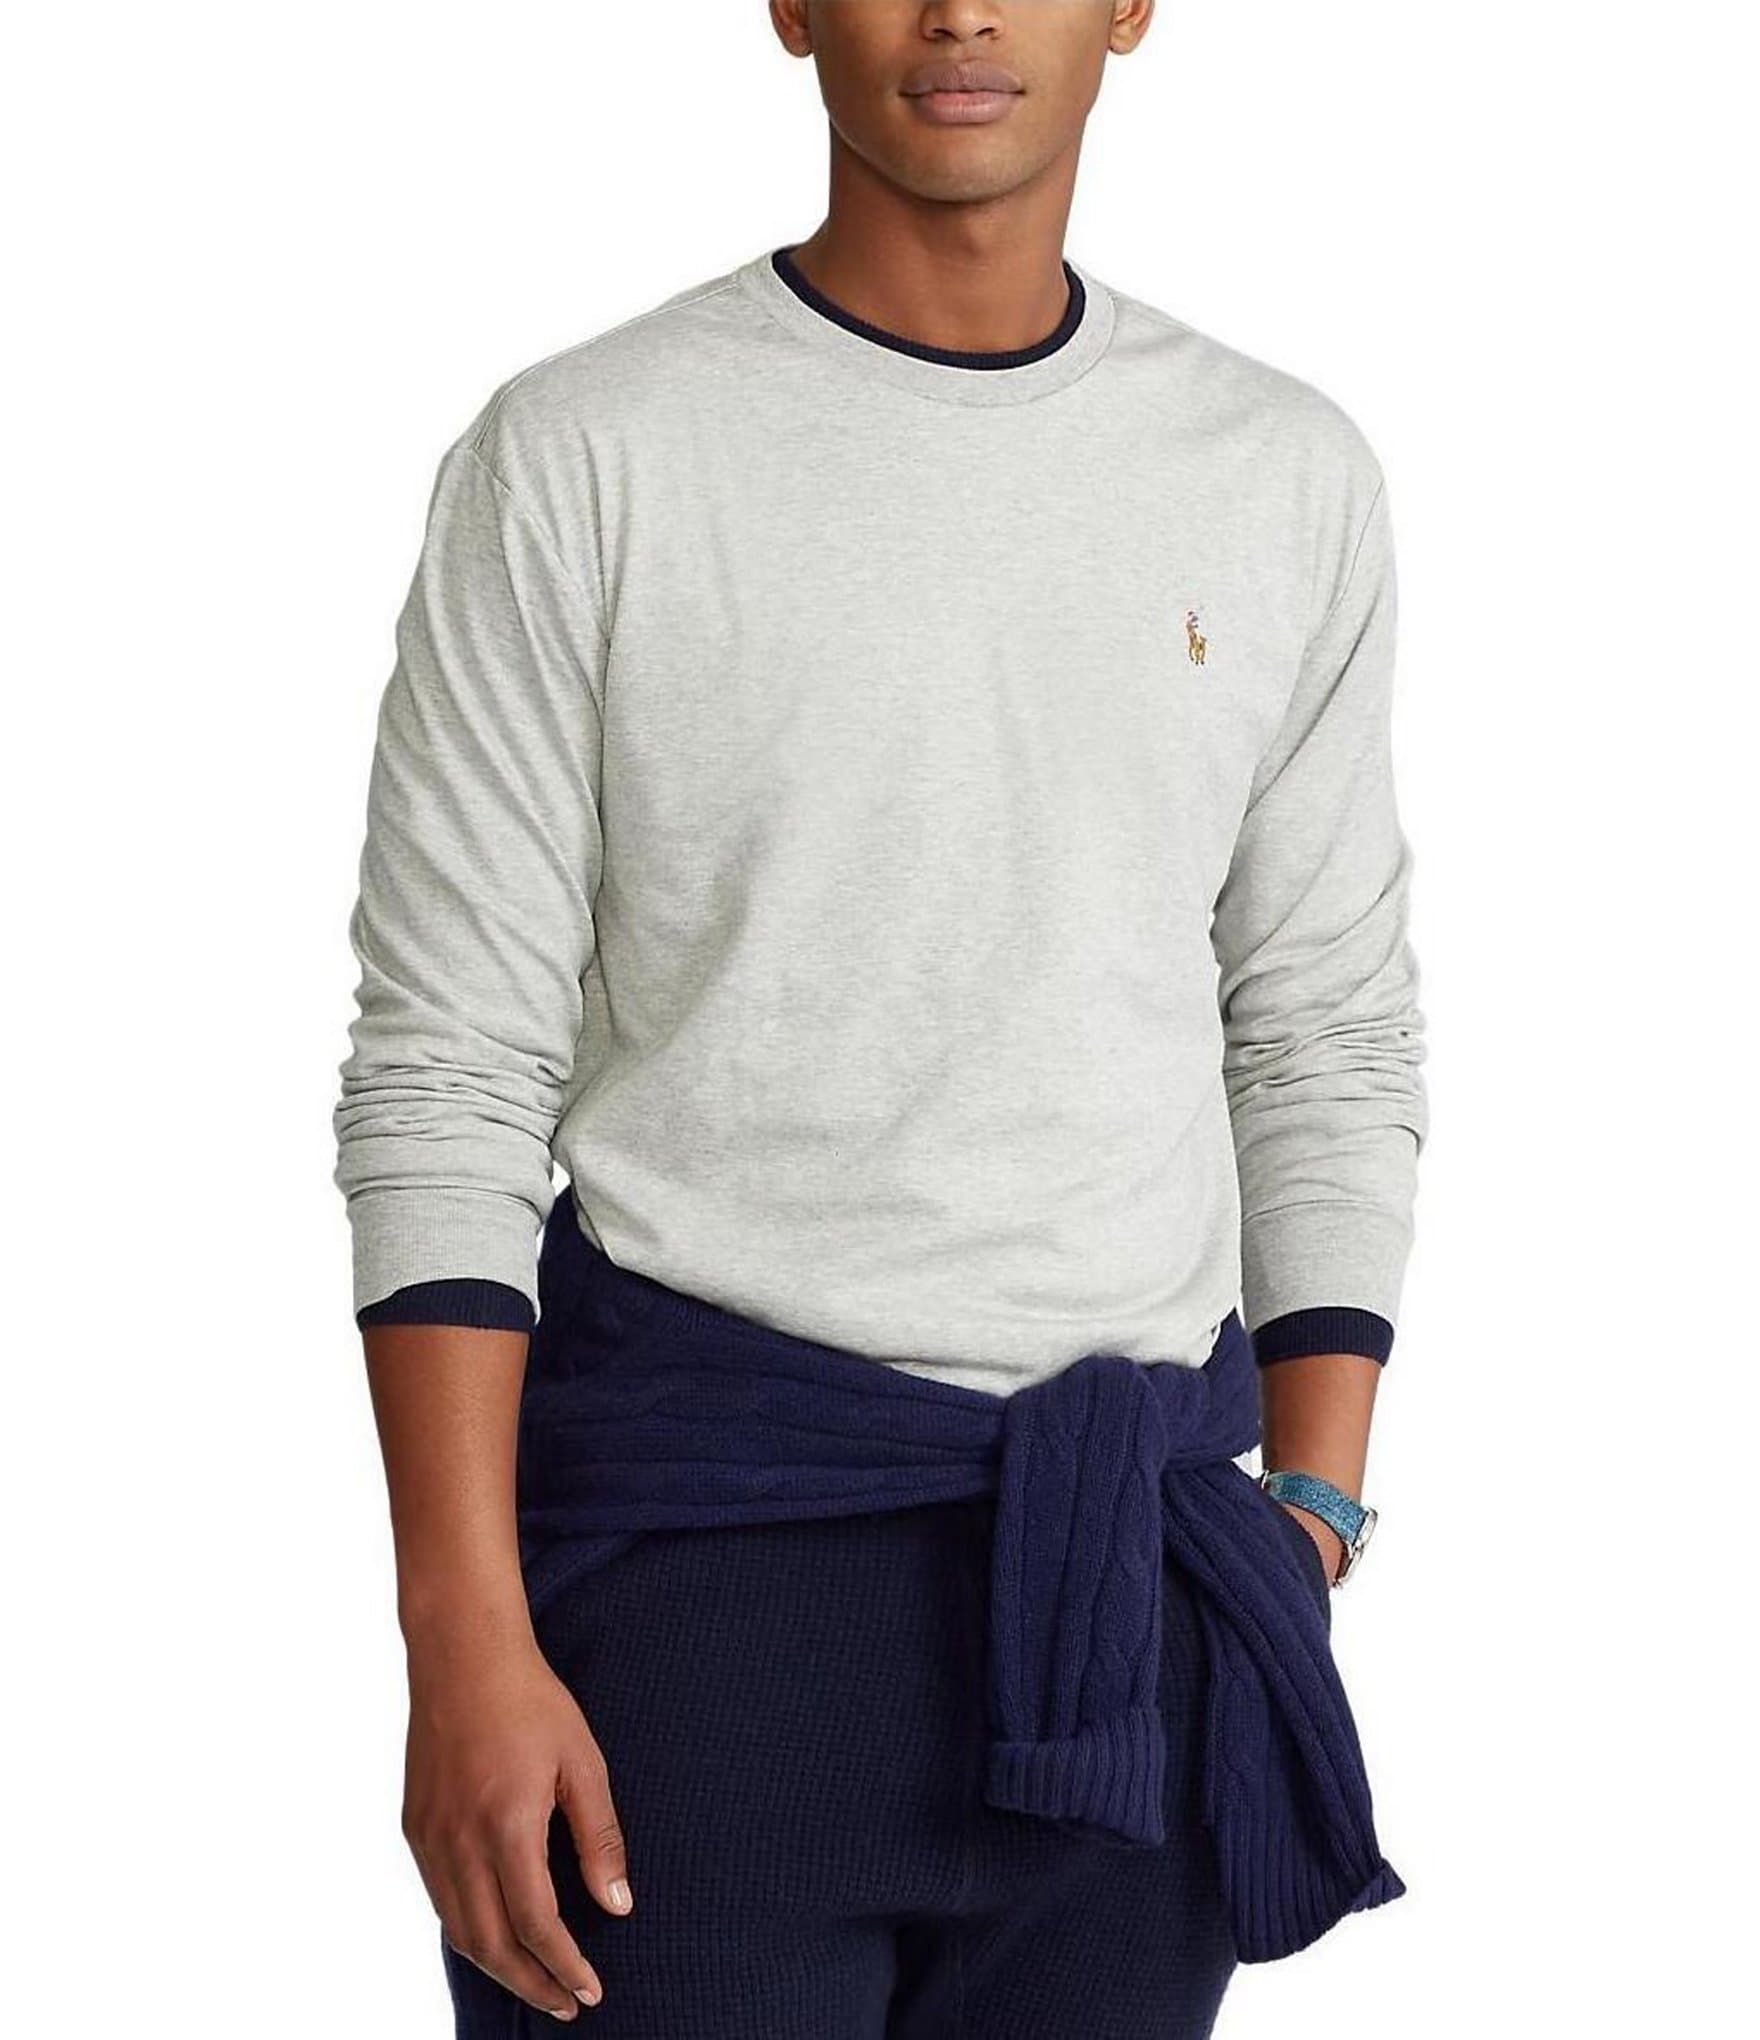  POLO RALPH LAUREN Mens Classic Fit 3 Button Interlock Polo  Shirt (Medium, Light Gray Heather) : Clothing, Shoes & Jewelry